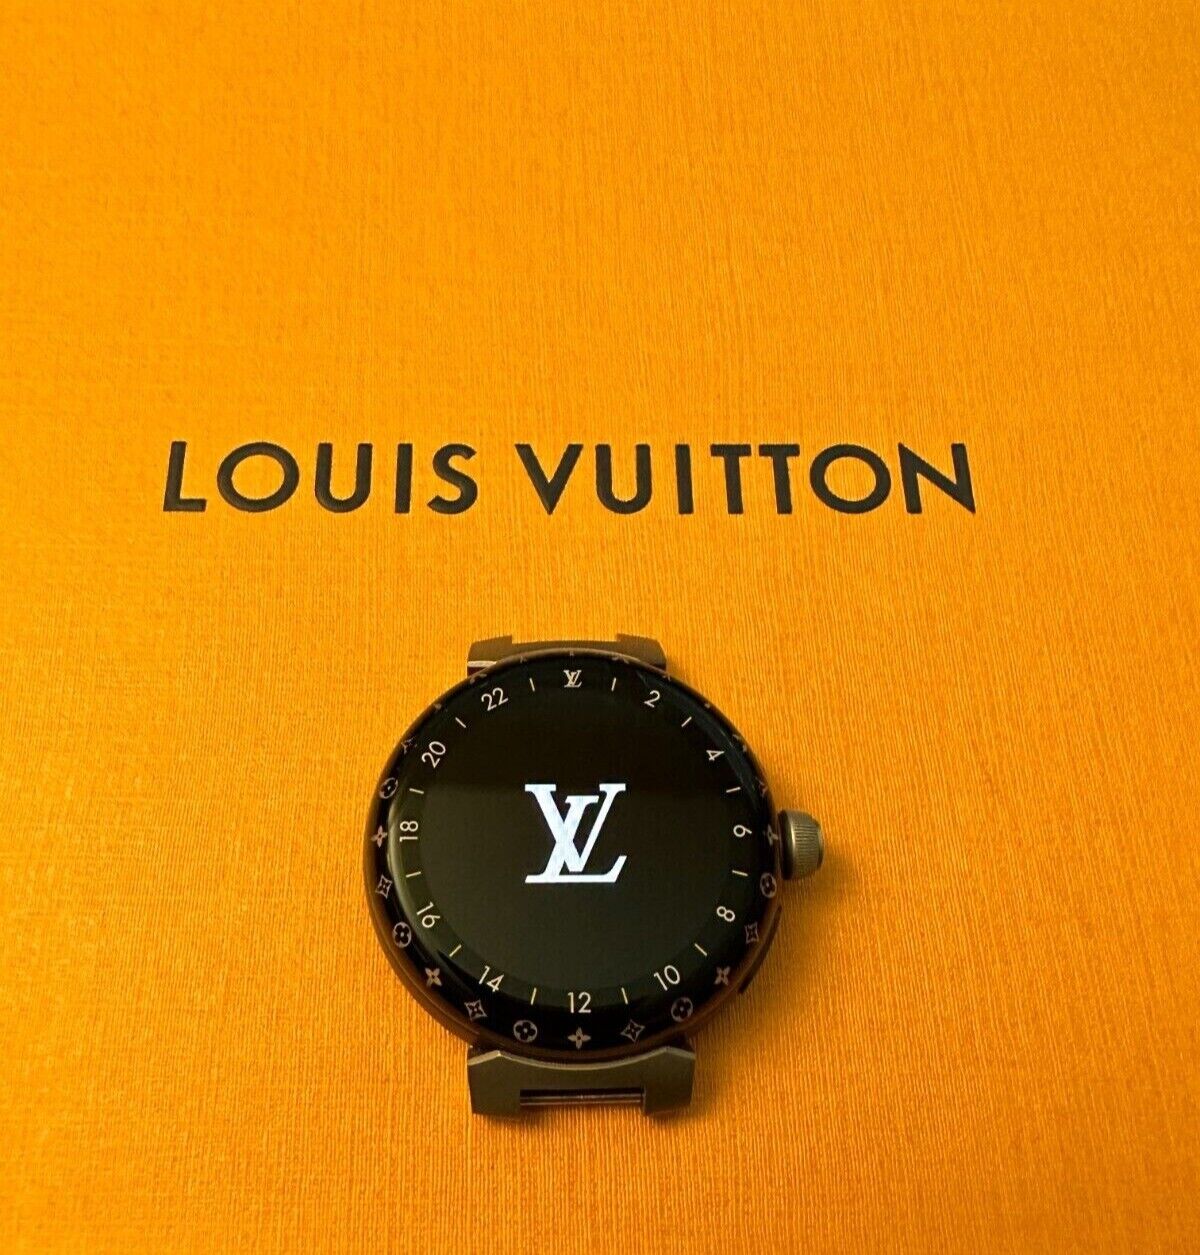 Louis Vuitton Tambour Horizon Light Up Connected Watch Black